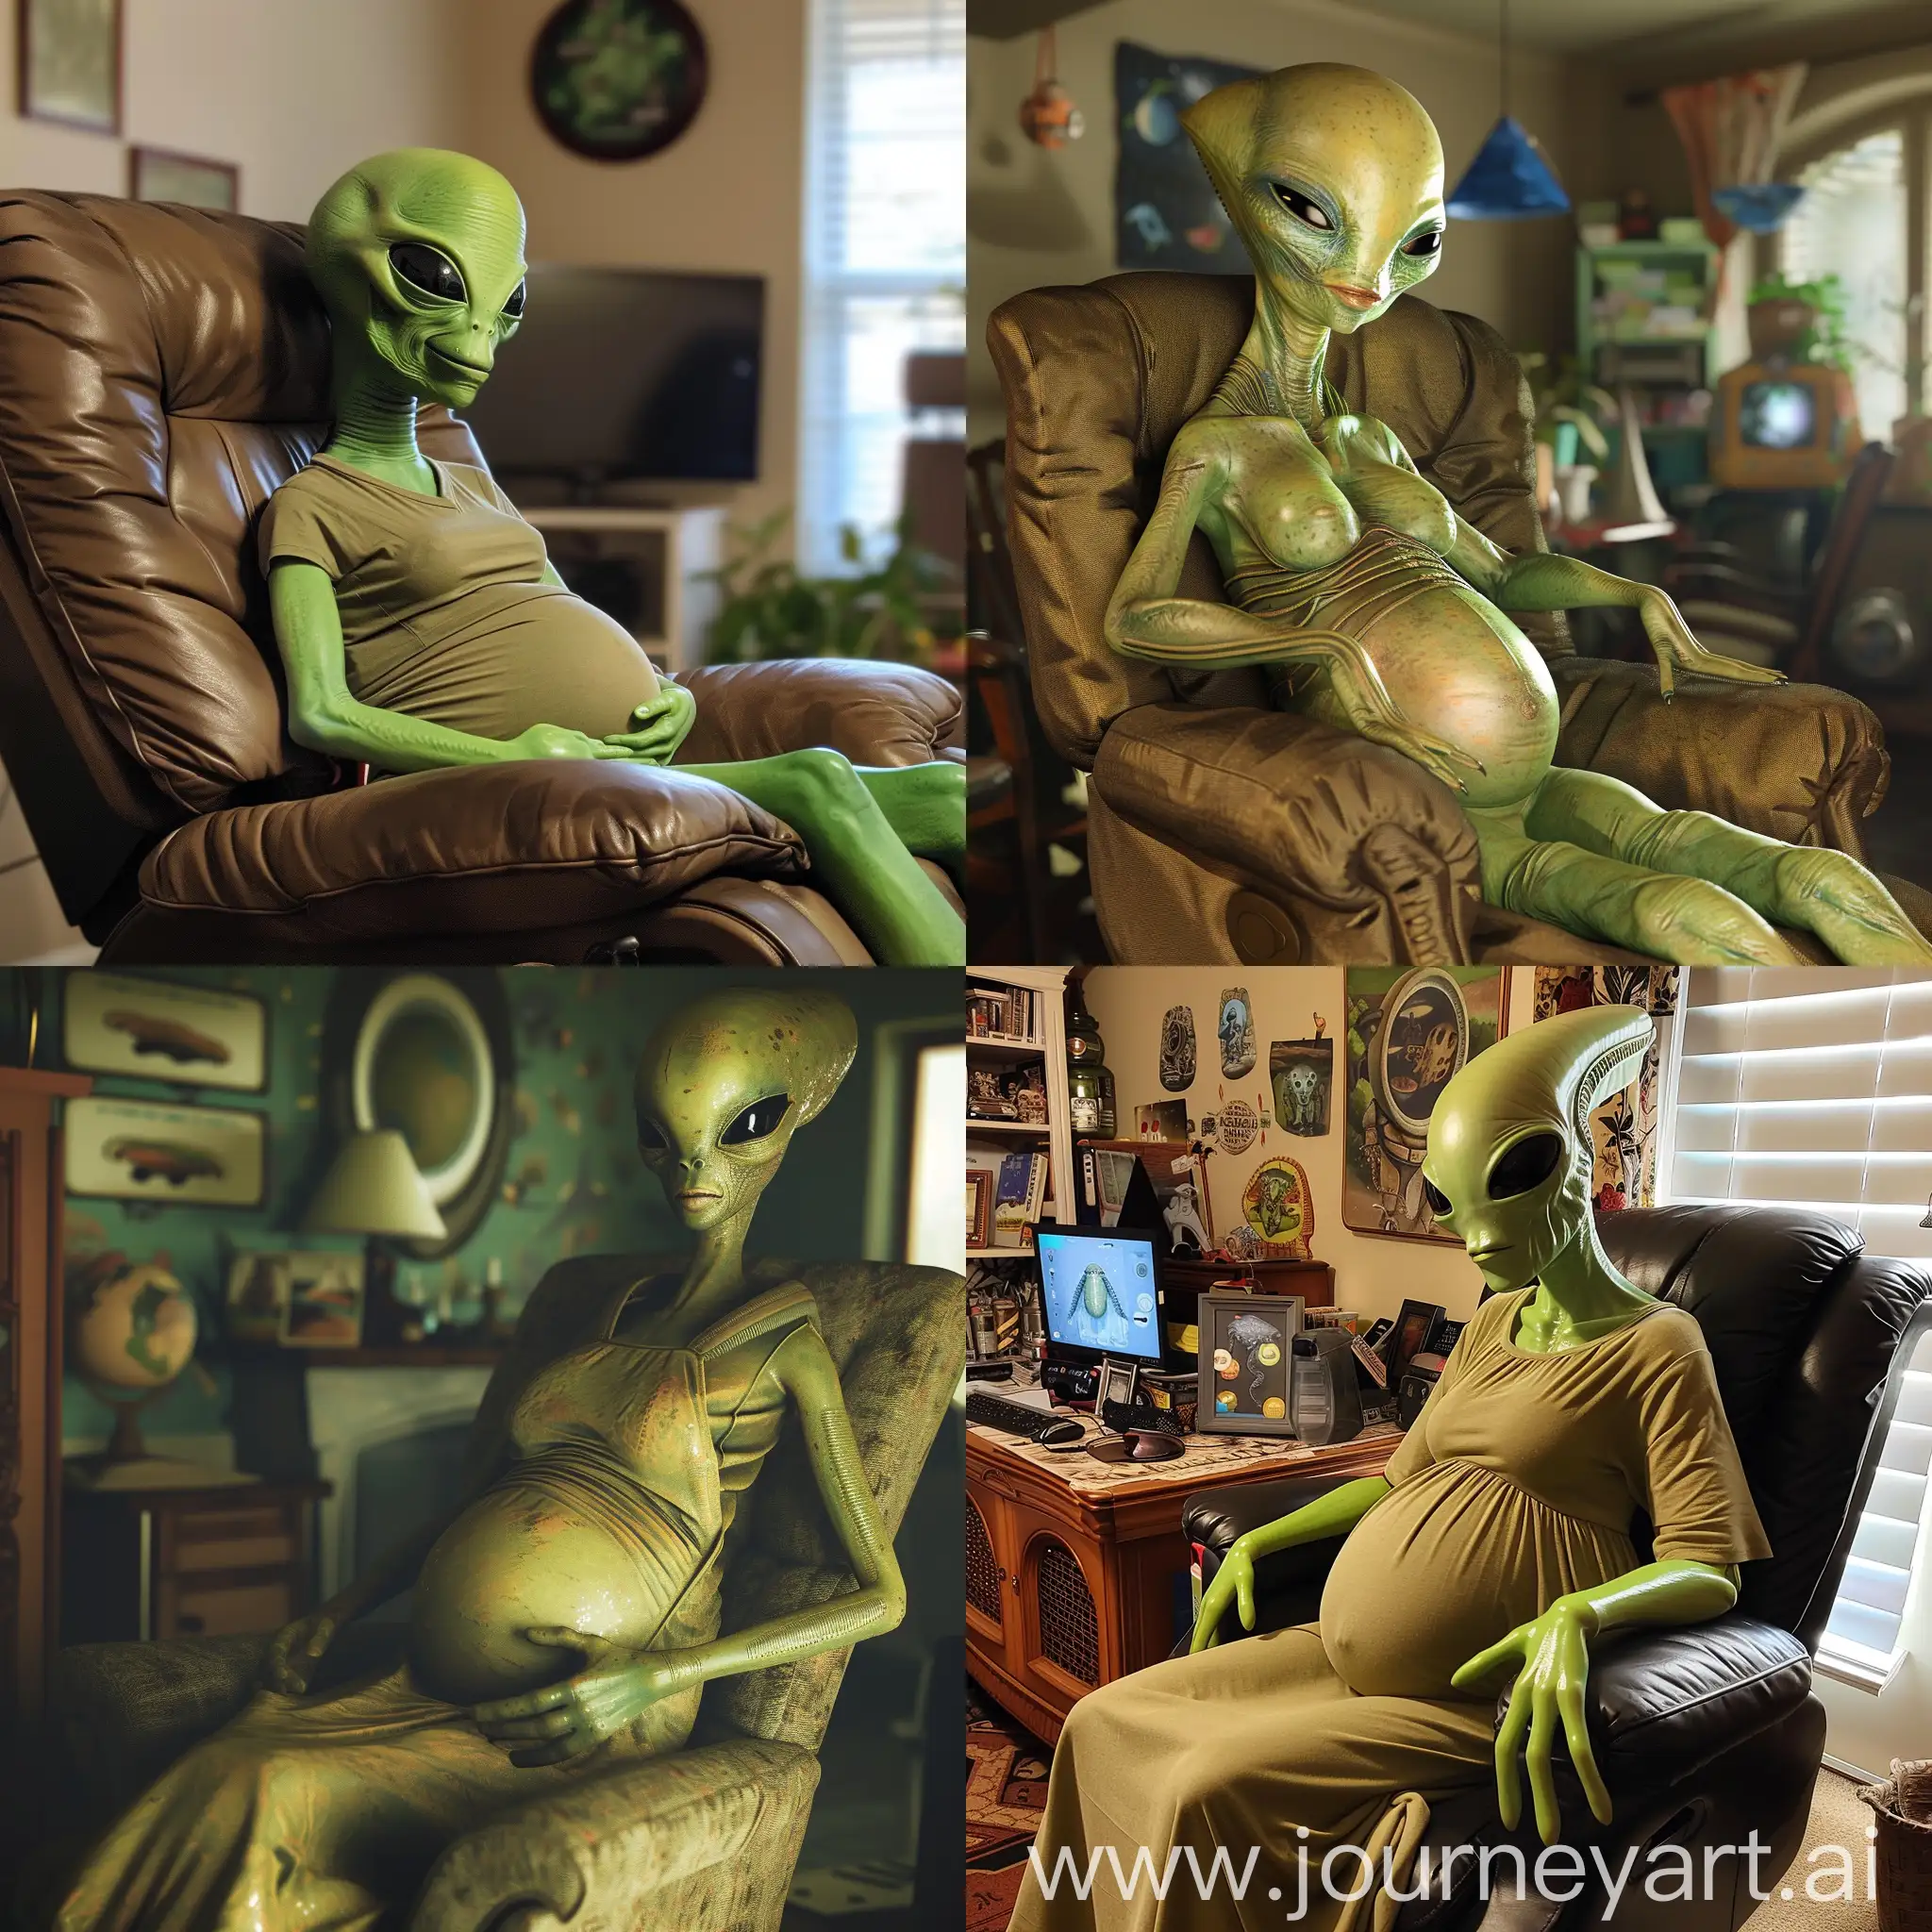 A female green alien, 7 feet tall, Sitting in a recliner, Very Pregnant.